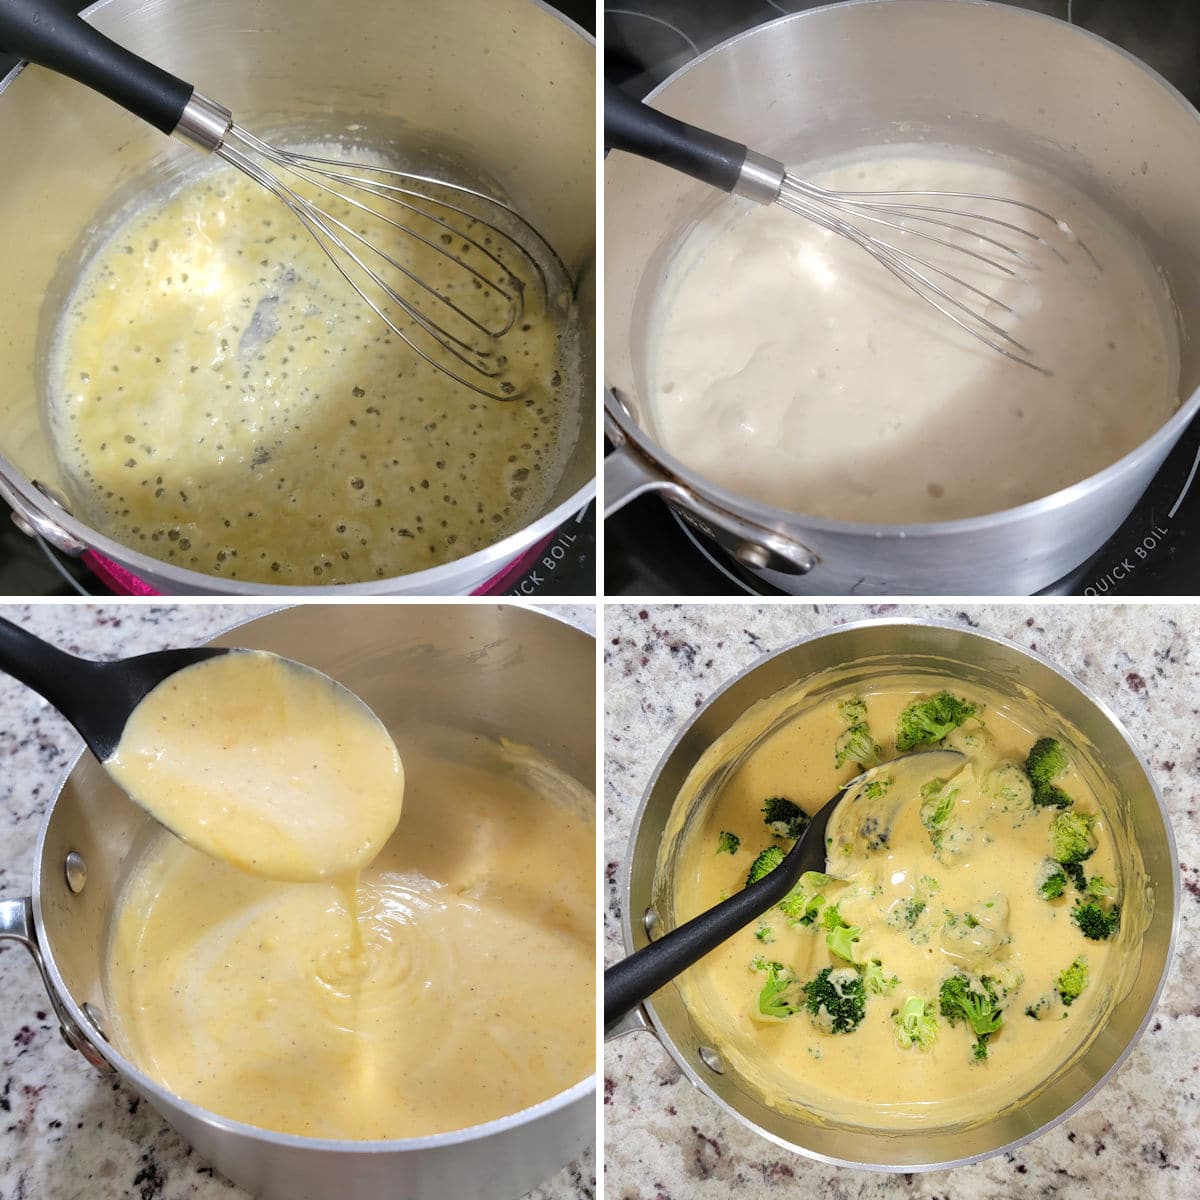 Making broccoli cheese sauce in a saucepan.